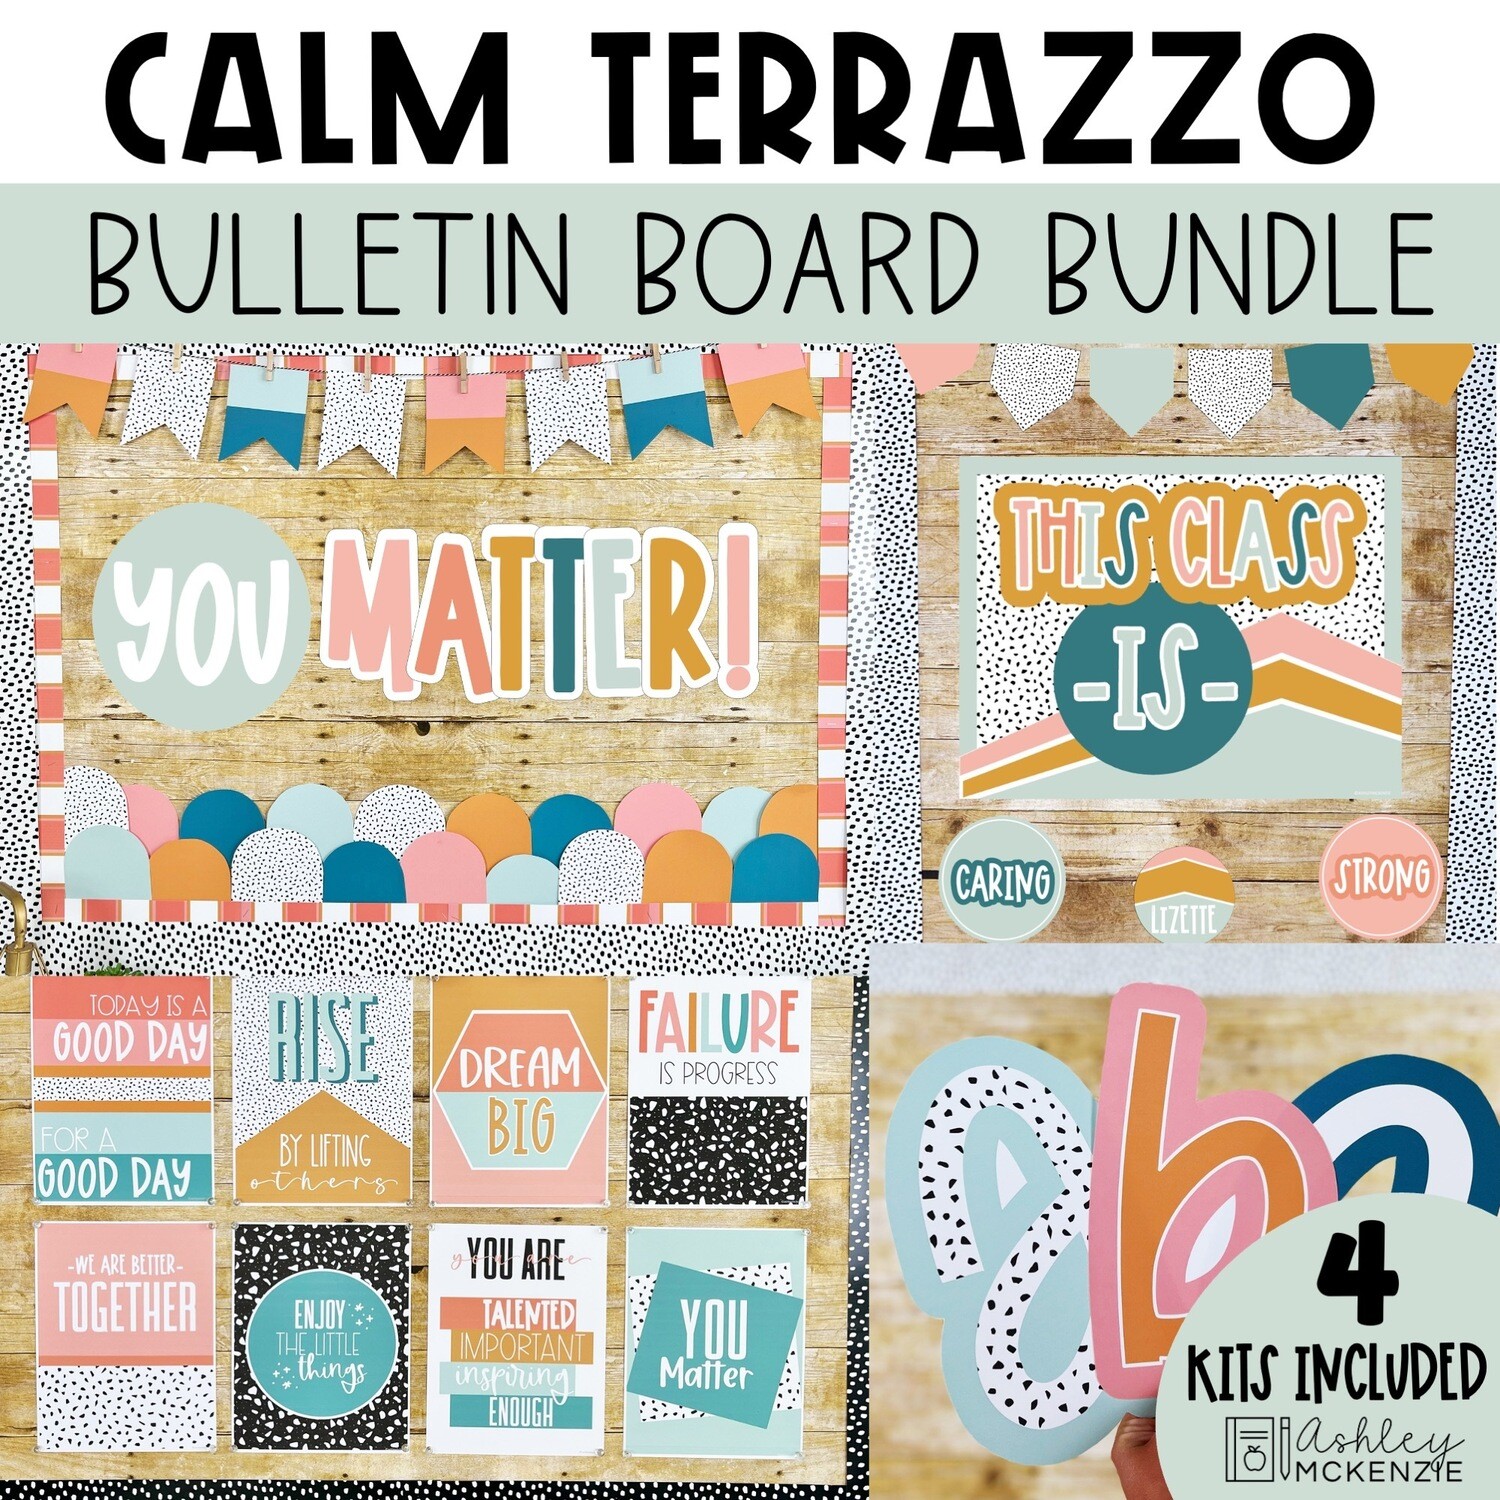 Calm Terrazzo Bulletin Board, Posters, A-Z Bulletin Board Letters, and Door Decor Mini Bundle